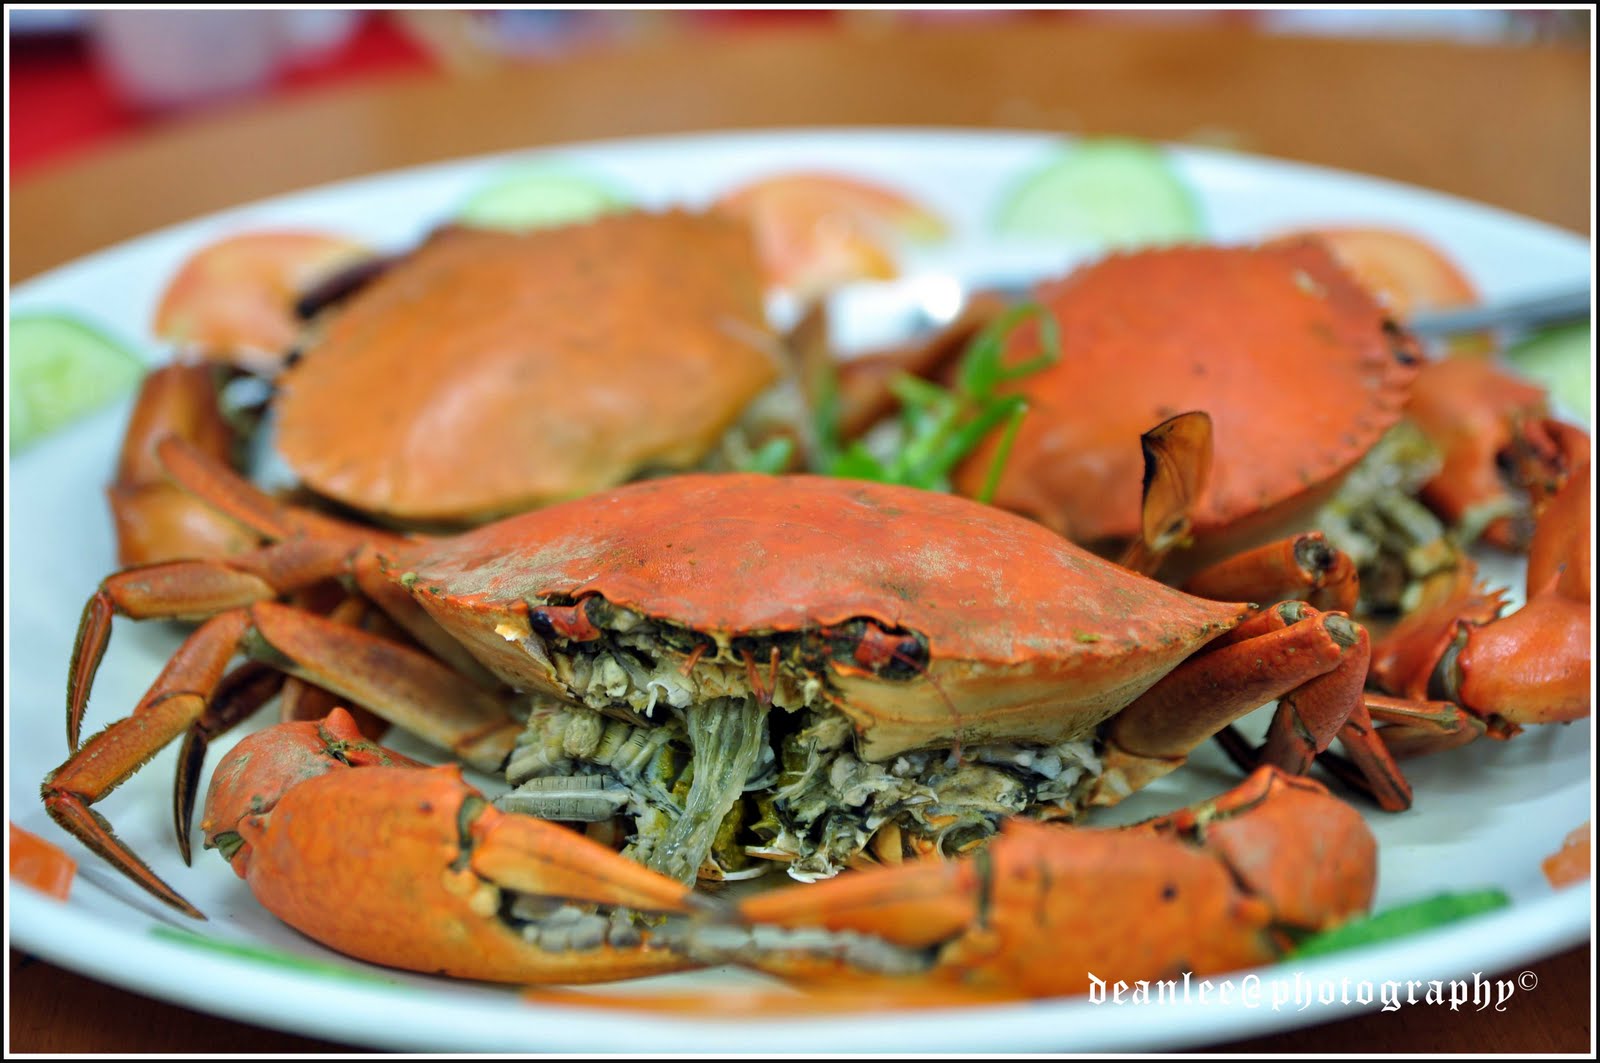 DeanLee's photoblog: Crab Dinner......